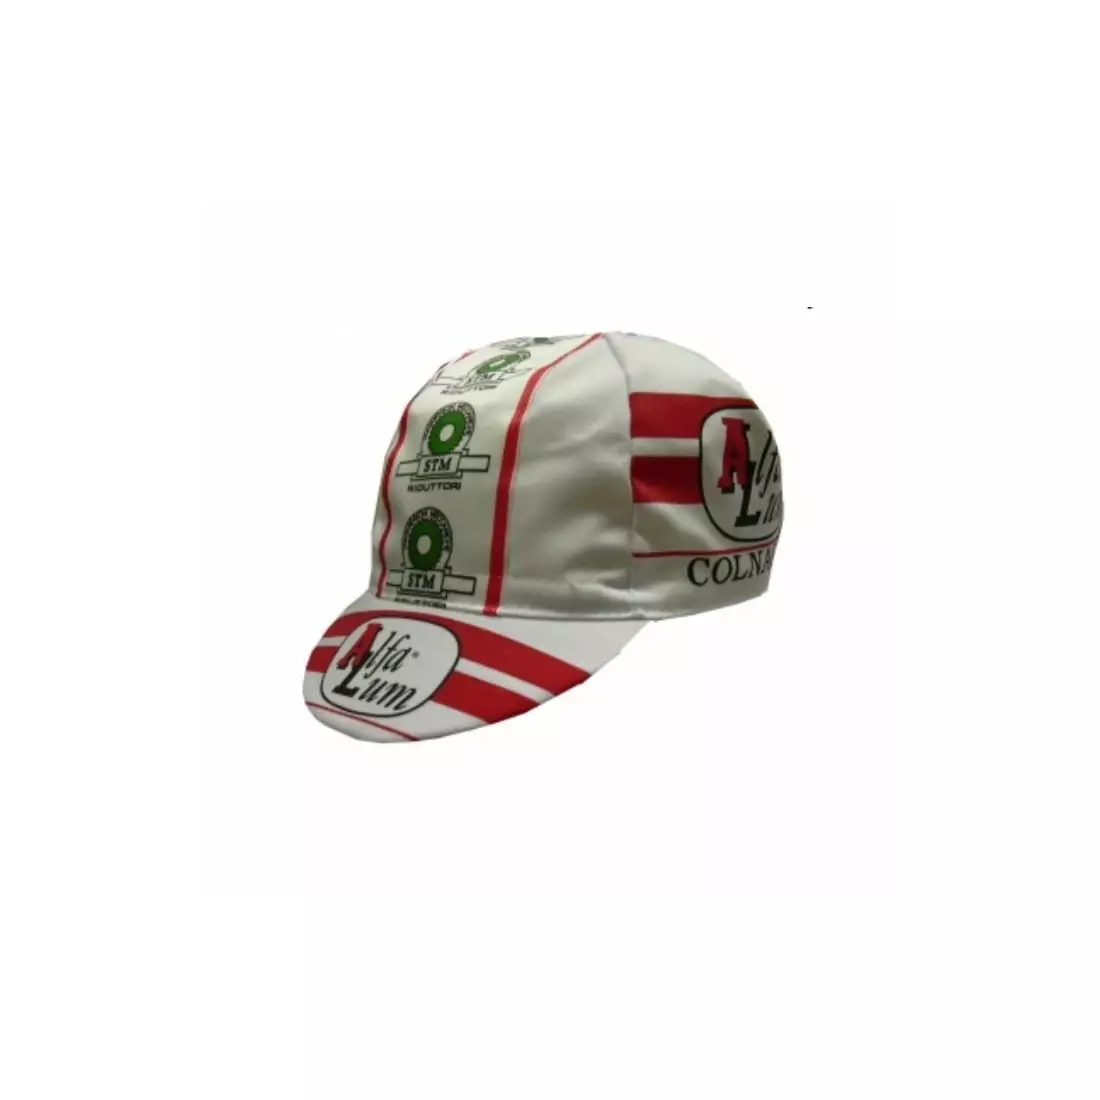 APIS PROFI ALFA LUM COLNAGO cycling cap with visor